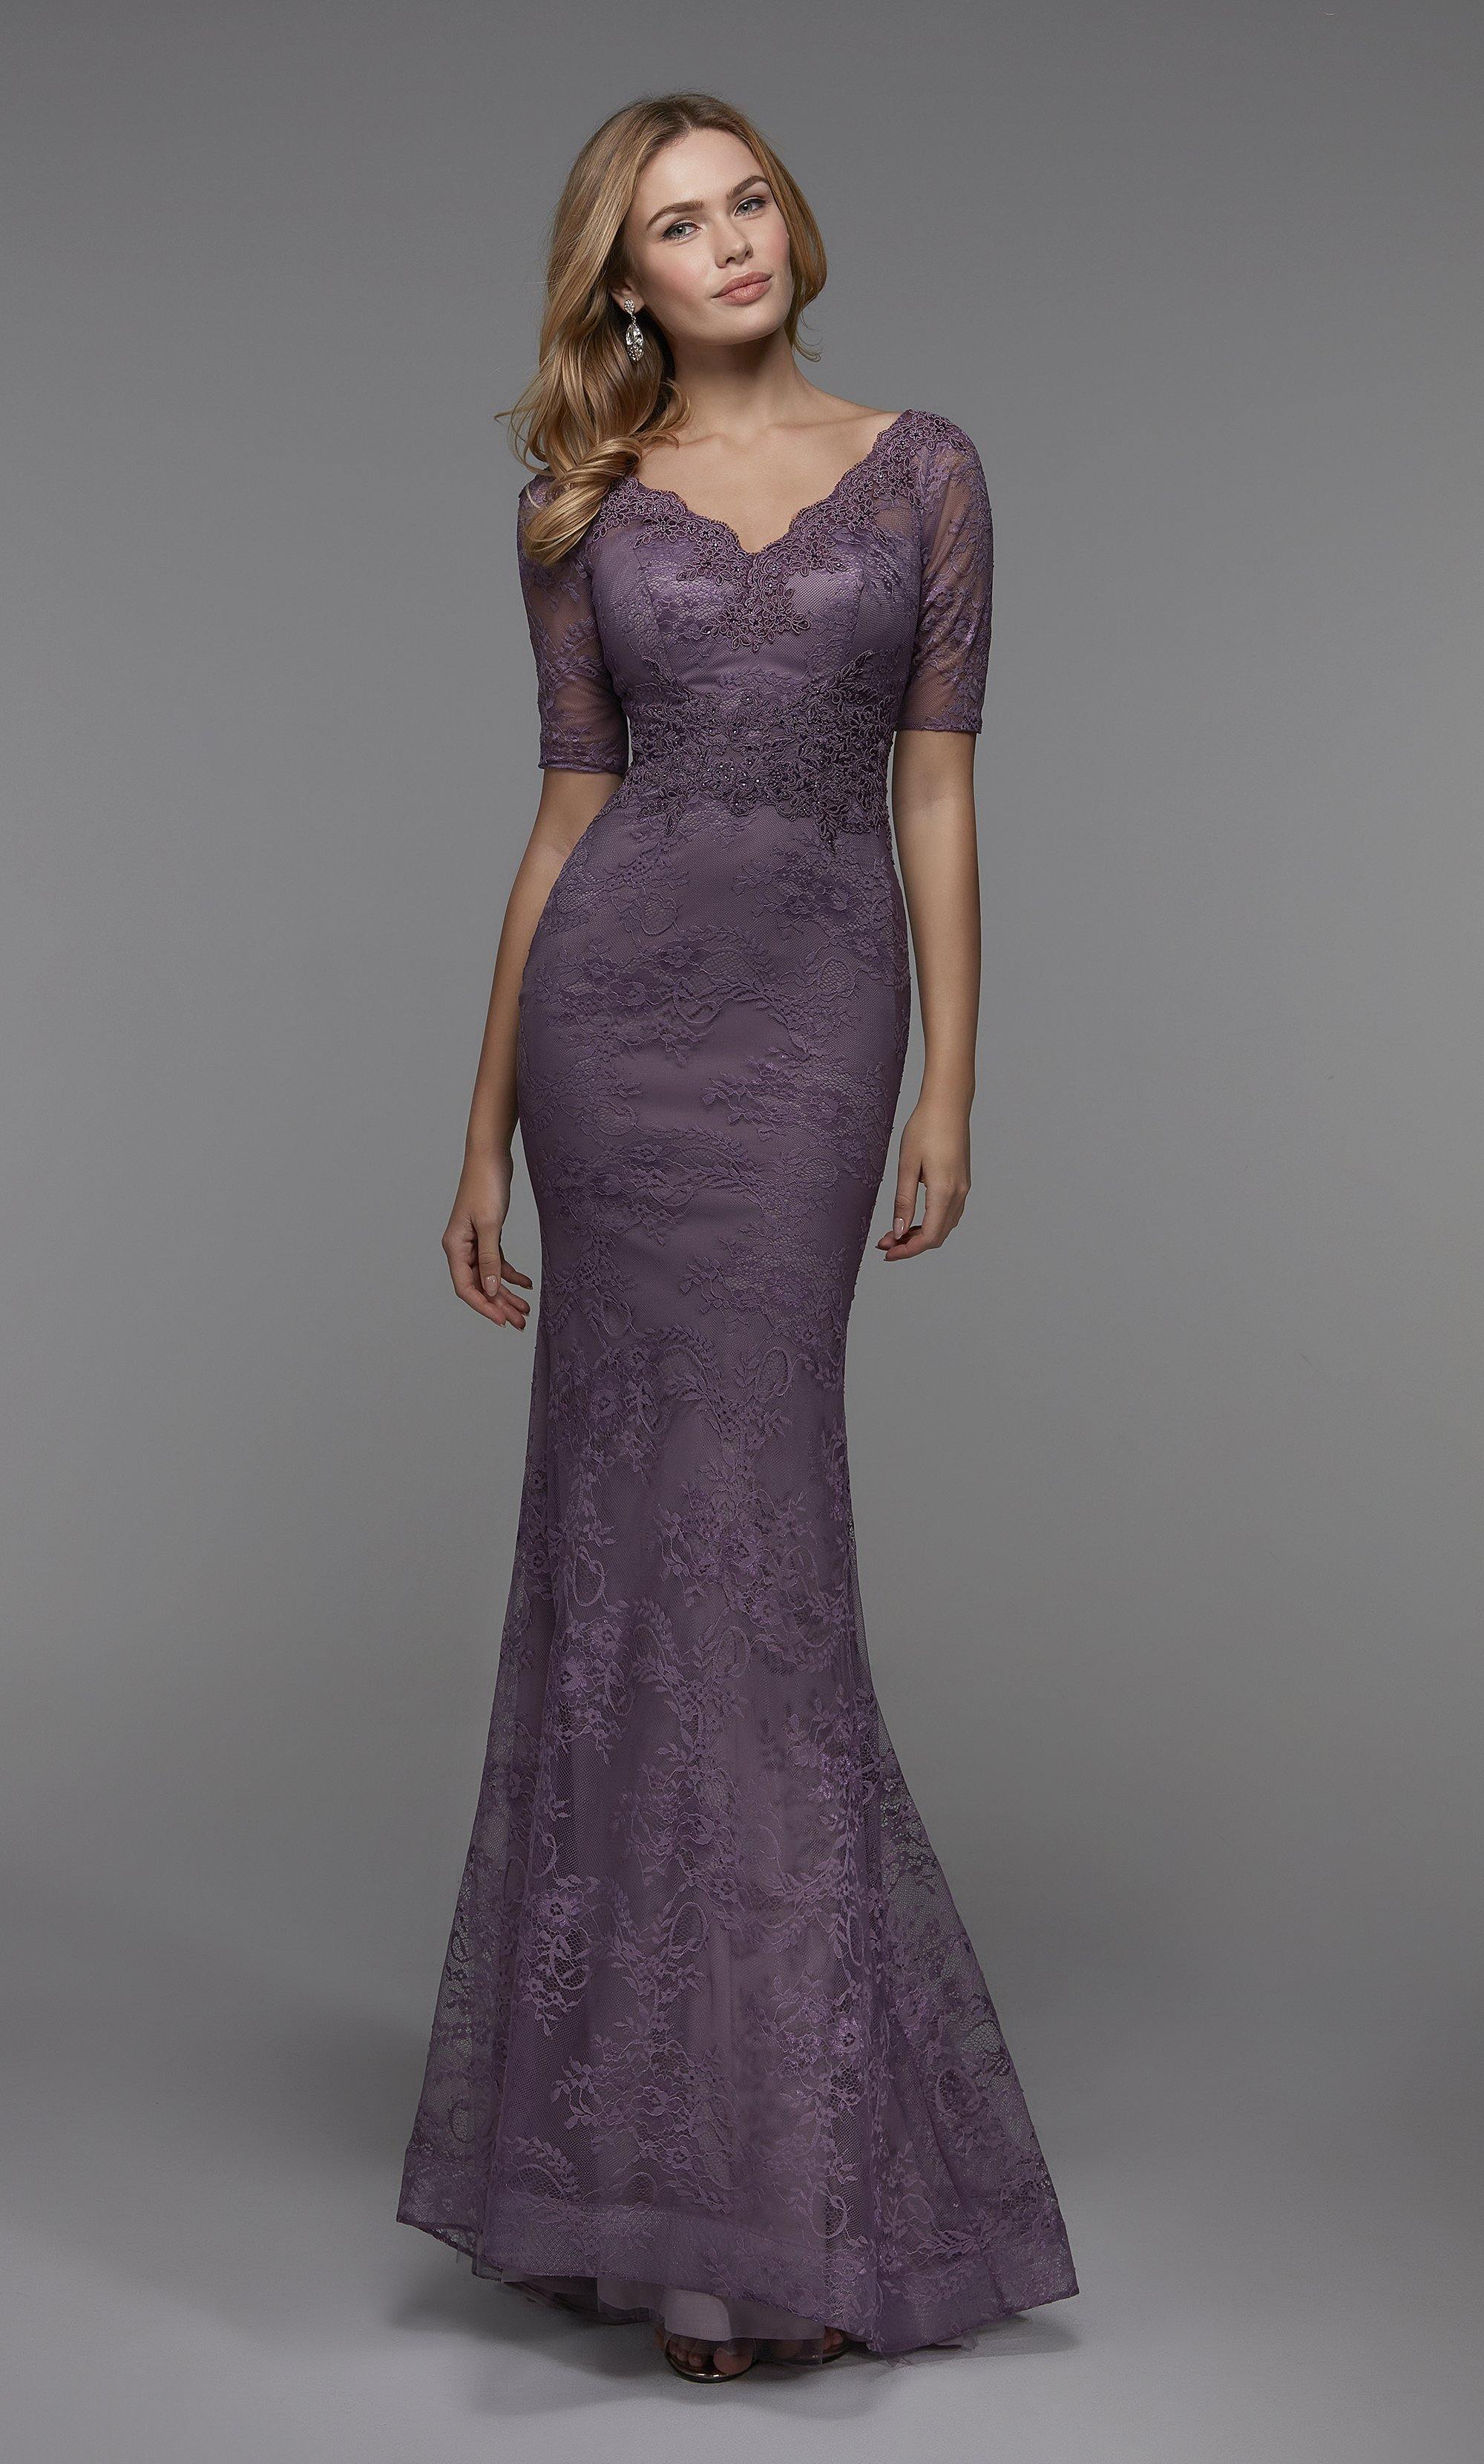 Formal Dress: 27536. Long Fitted Dresses, Illusion Neckline, Mermaid Alyce Paris